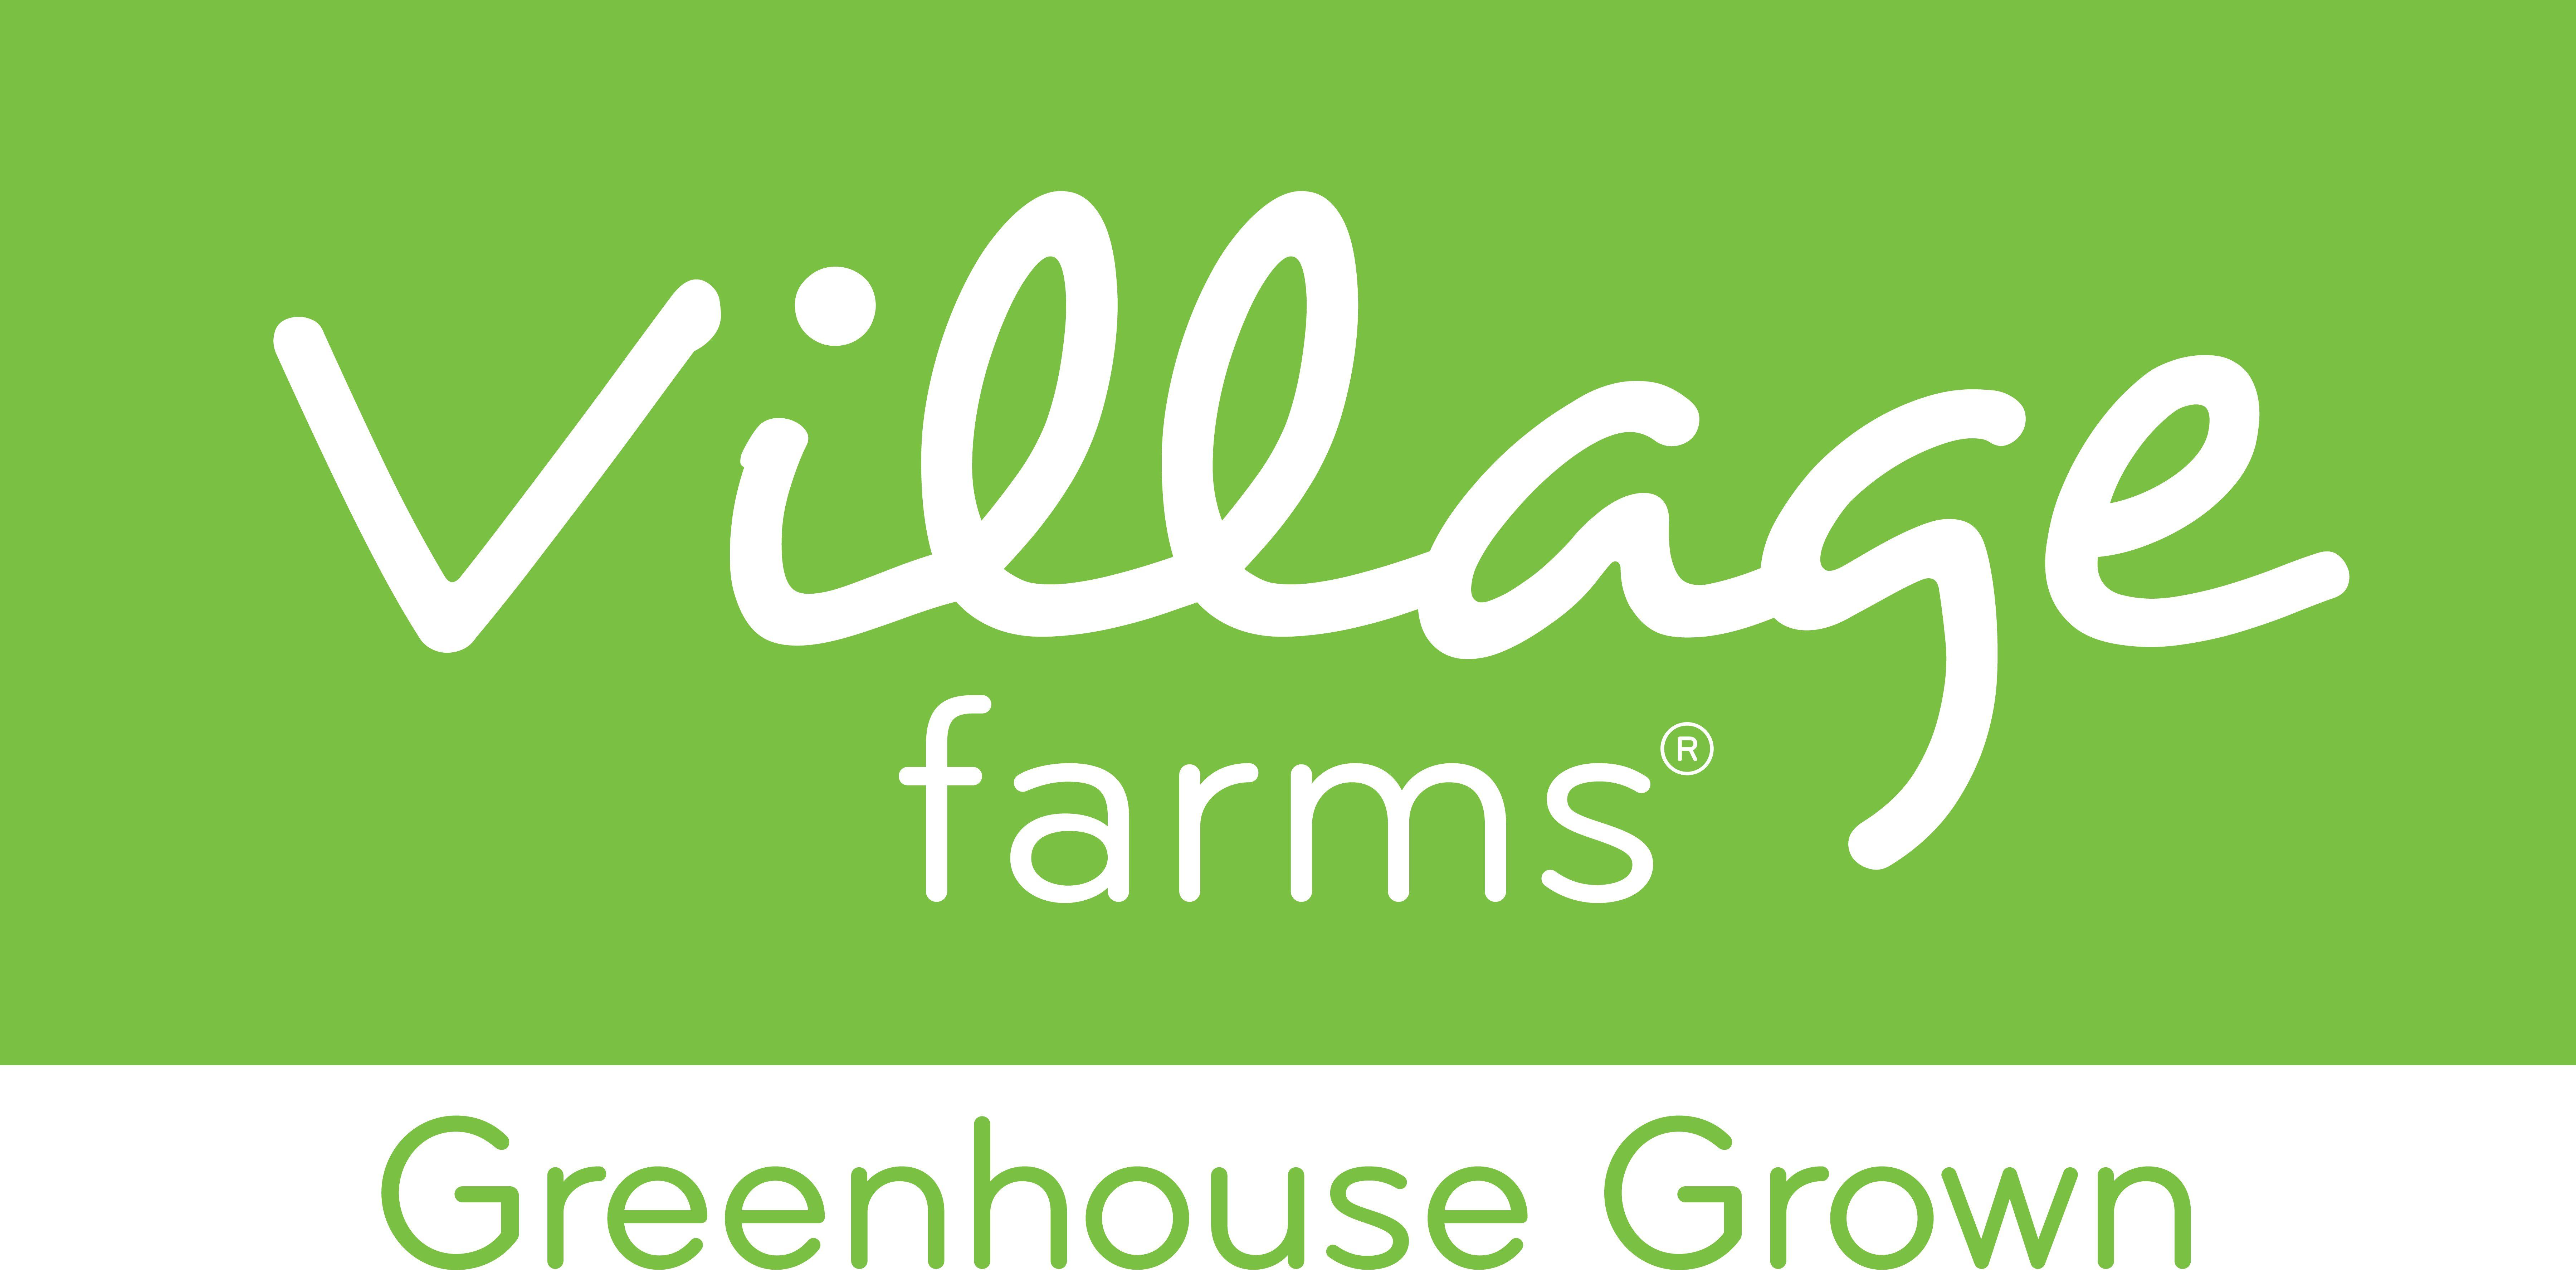 New SolarCity Logo - Village Farms, Solar City, MP2 Announce Monahans Solar Project ...